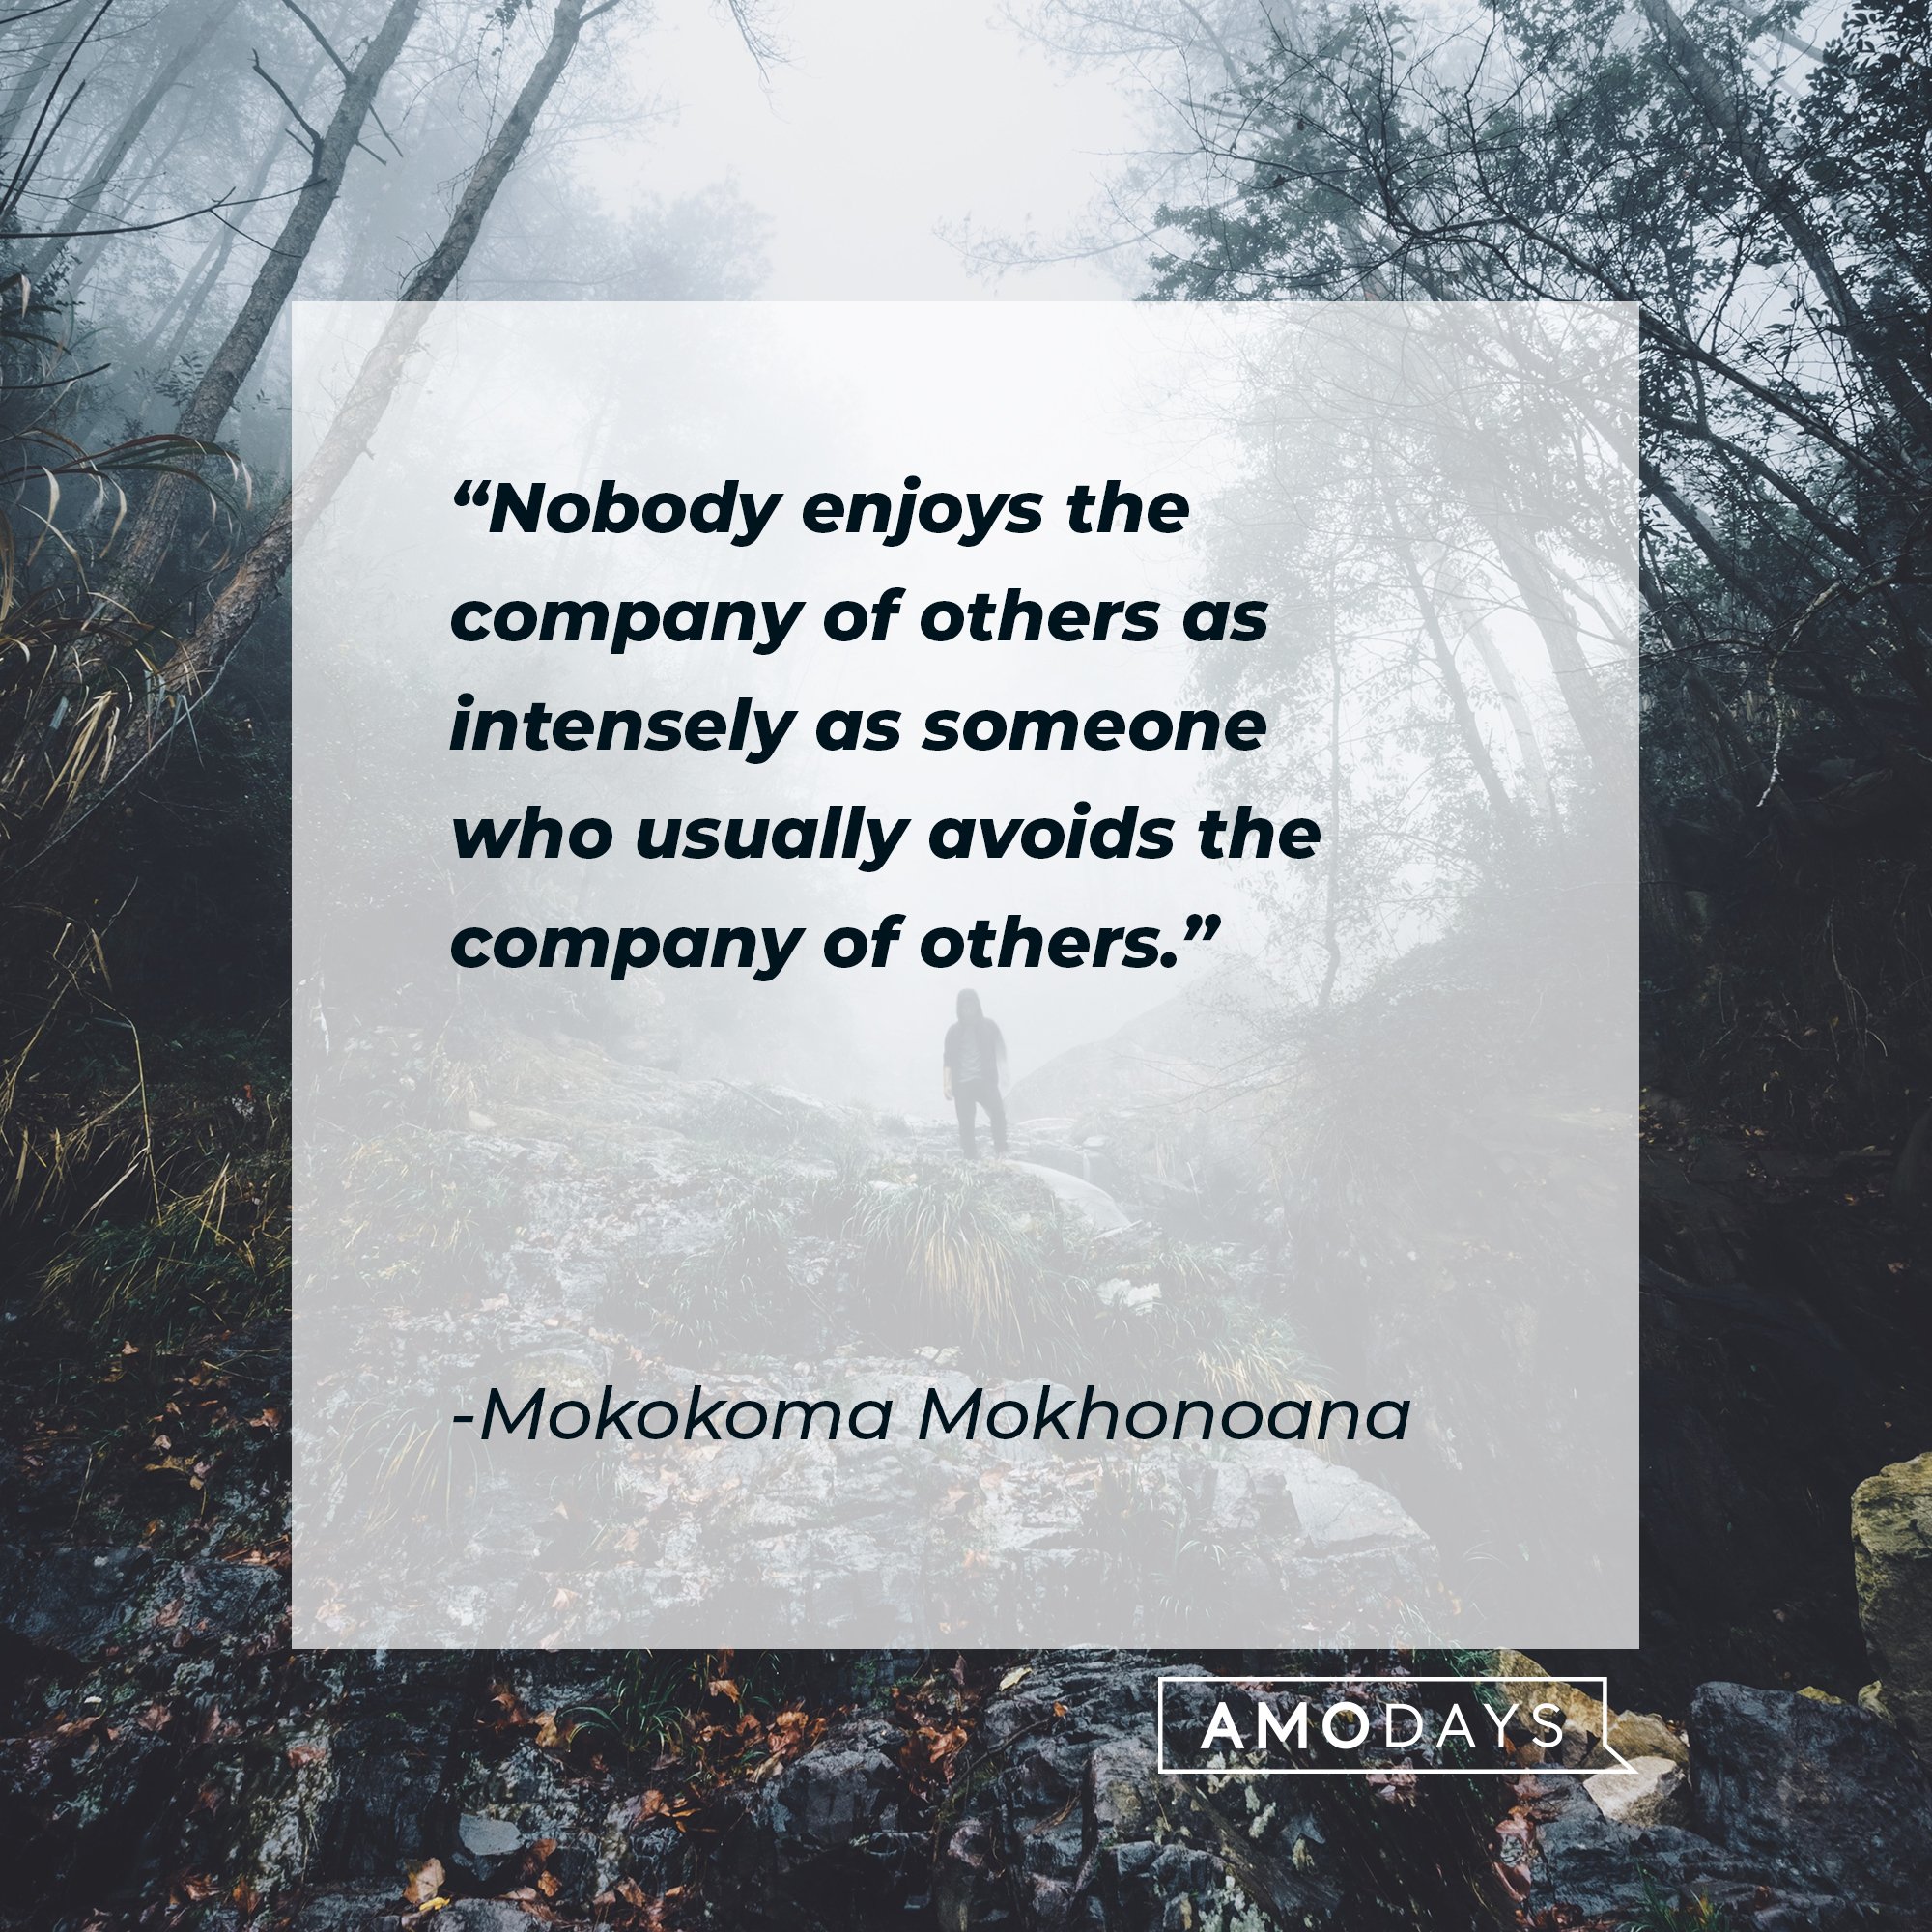   Mokokoma Mokhonoana’s quote: "Nobody enjoys the company of others as intensely as someone who usually avoids the company of others." | Image: AmoDays